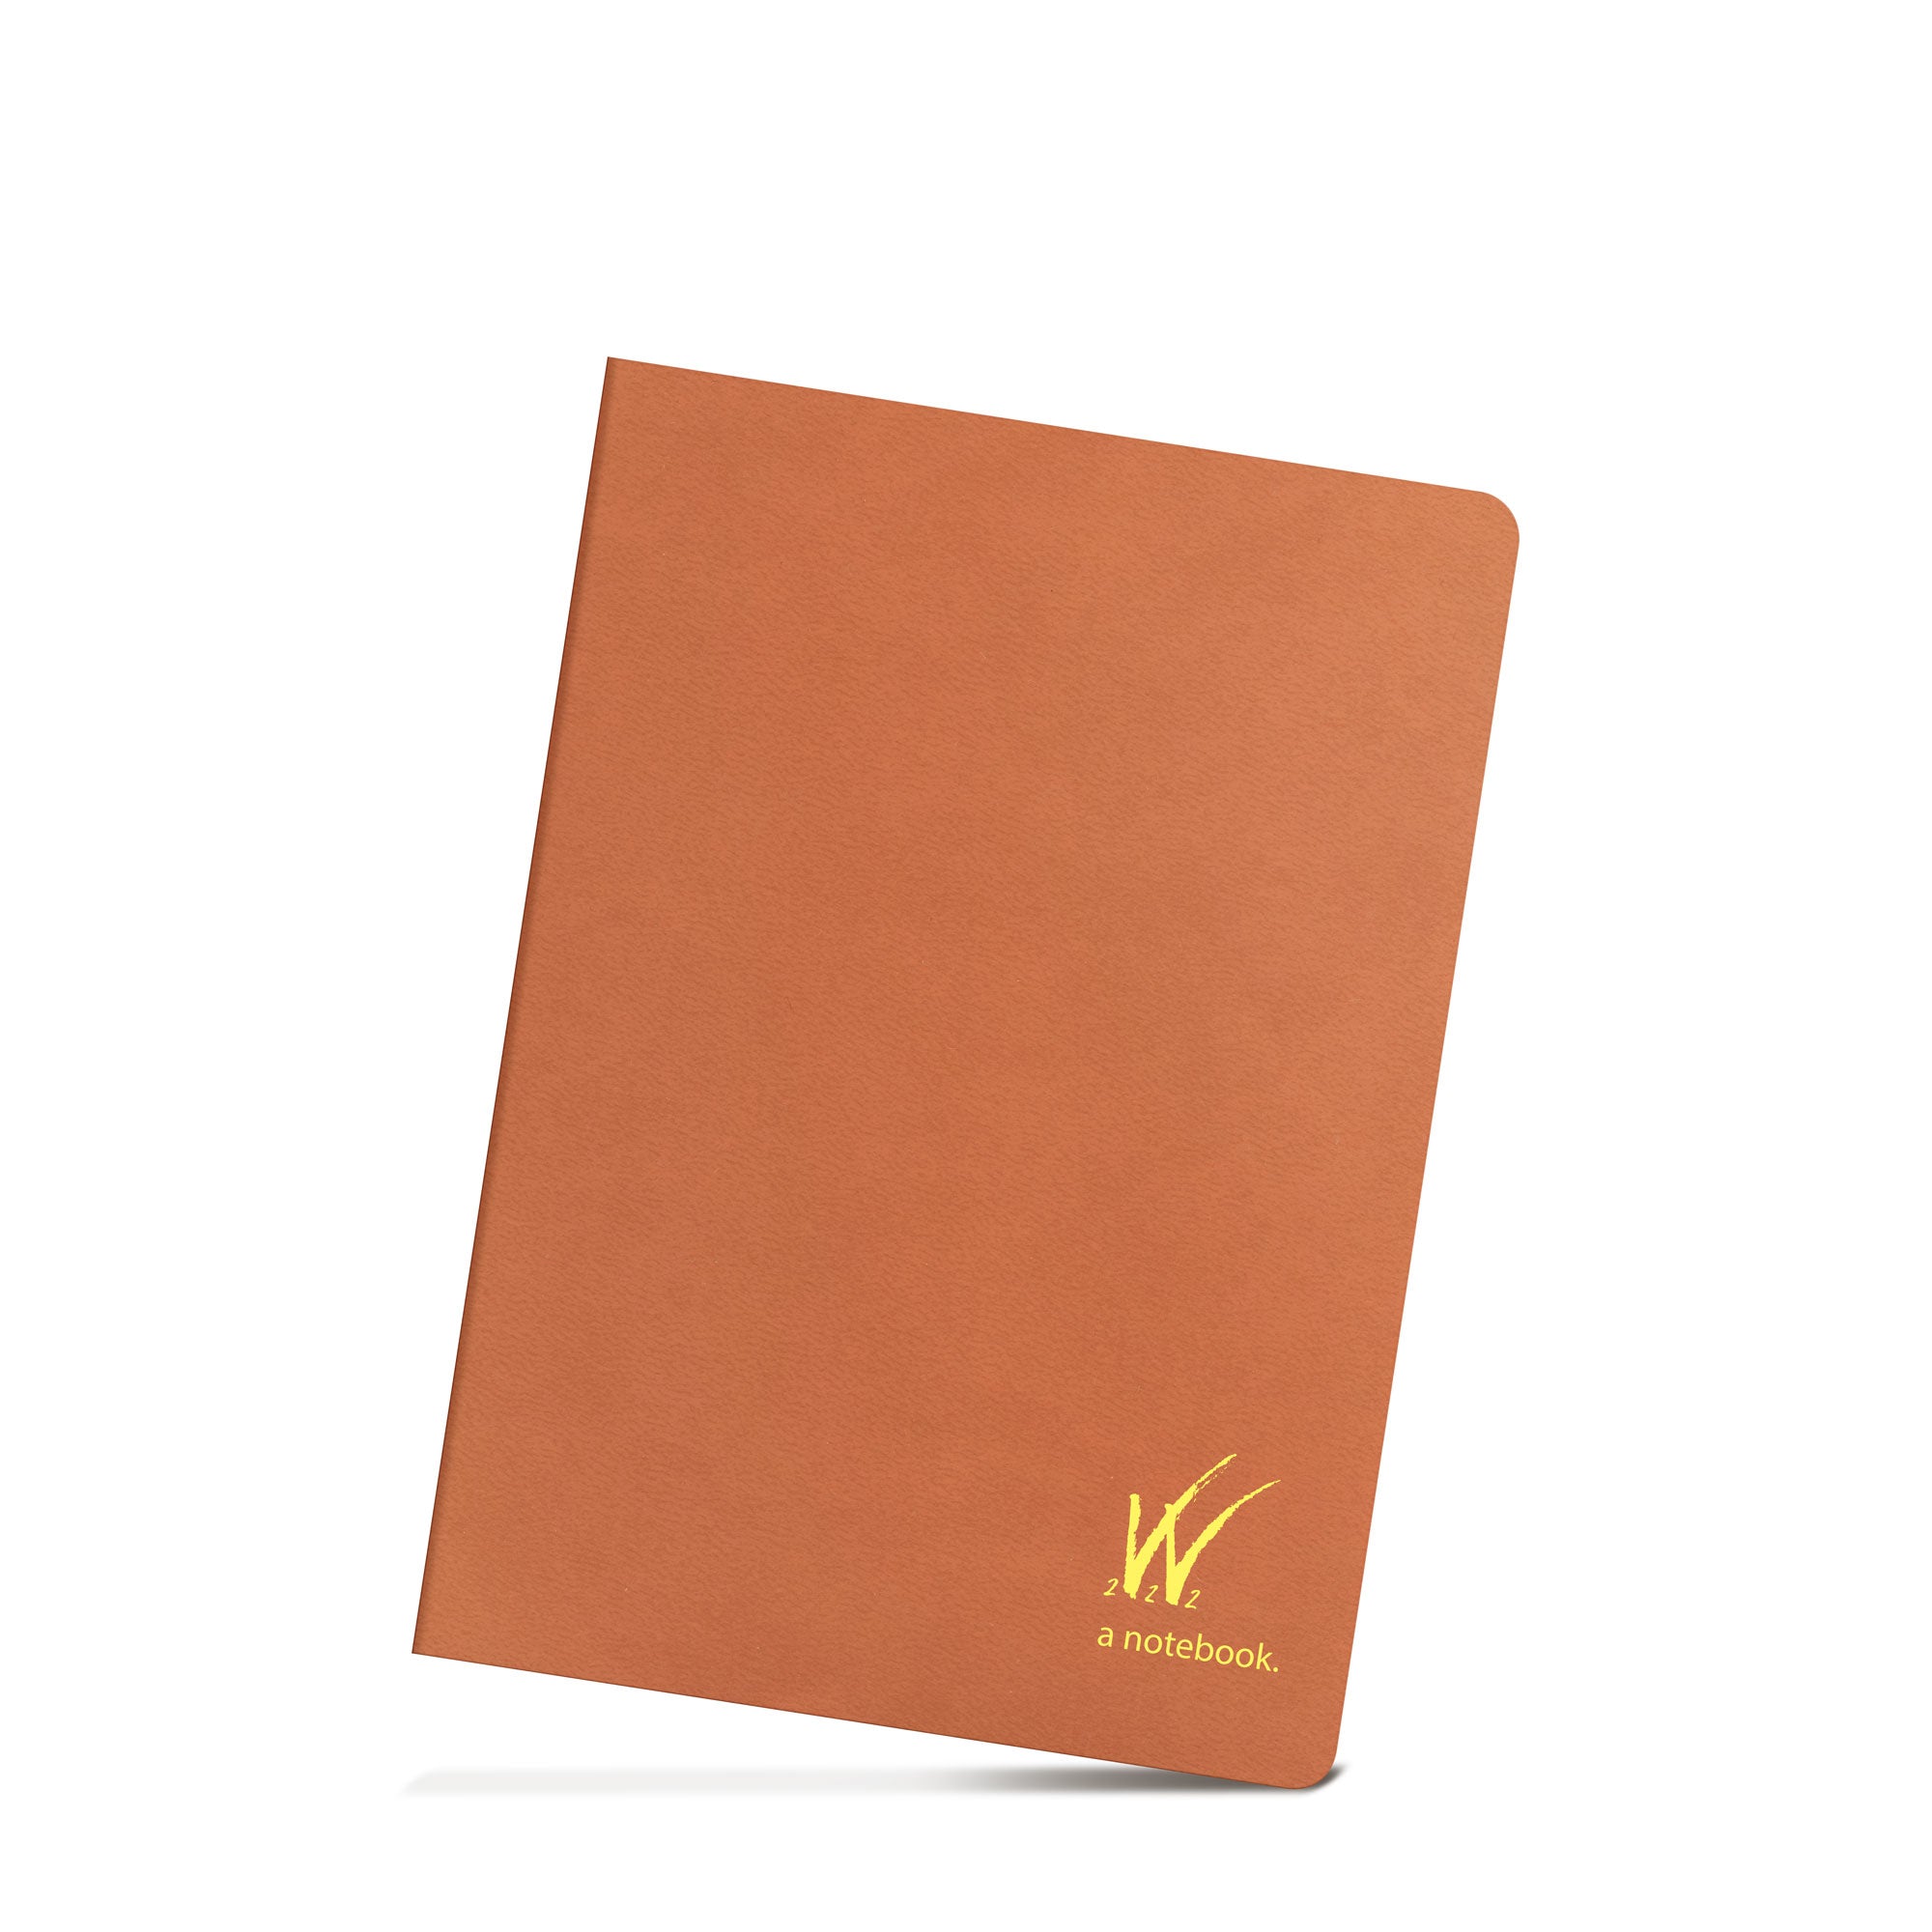 B6 Notebook Honeysuckle (Orange) (368 pages) Tomoe River